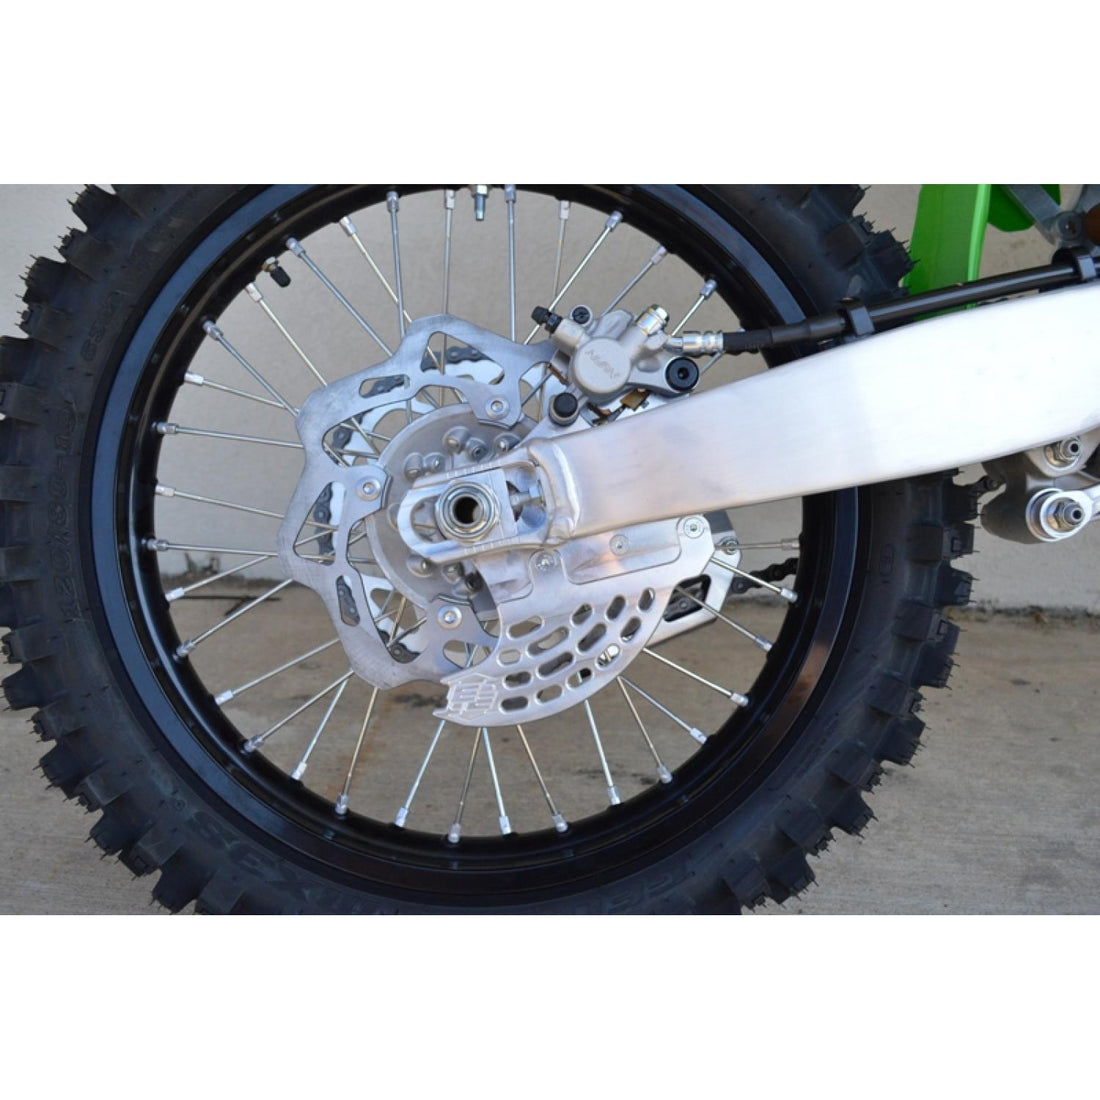 Enduro Engineering Kawasaki 2019–22 Aluminium-Scheibenschutz hinten | 33-8019